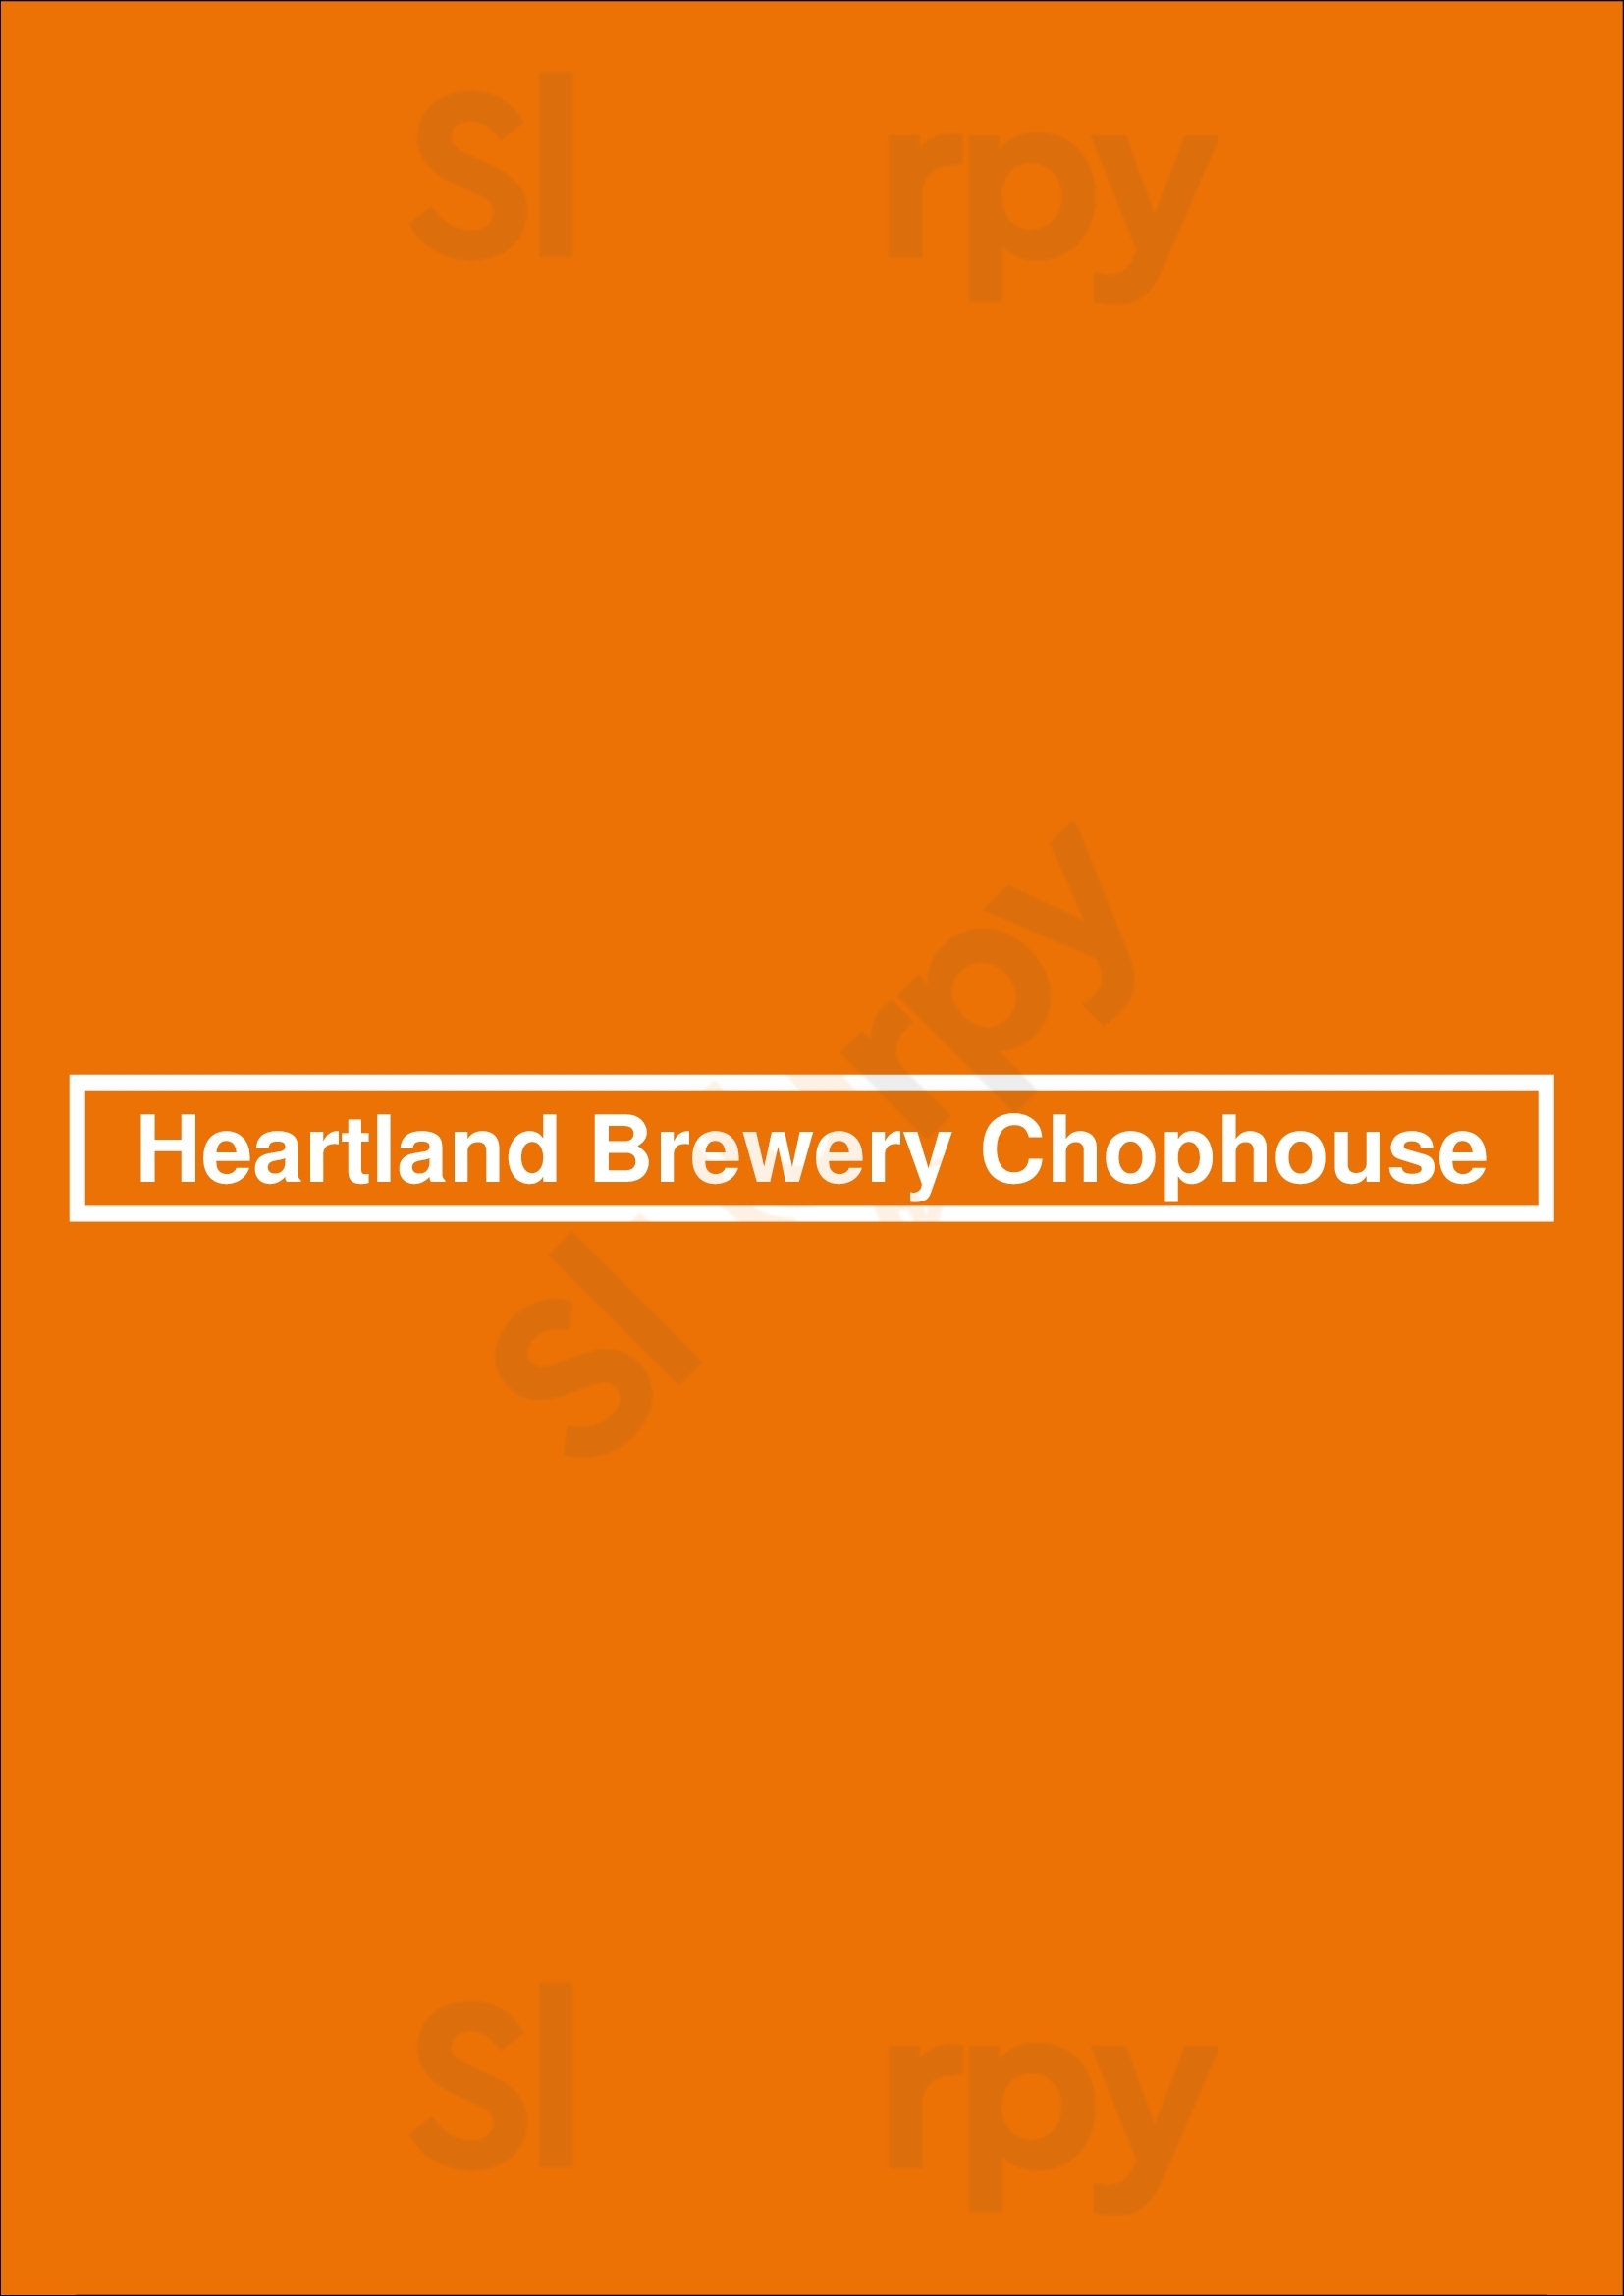 Heartland Brewery Chophouse New York City Menu - 1